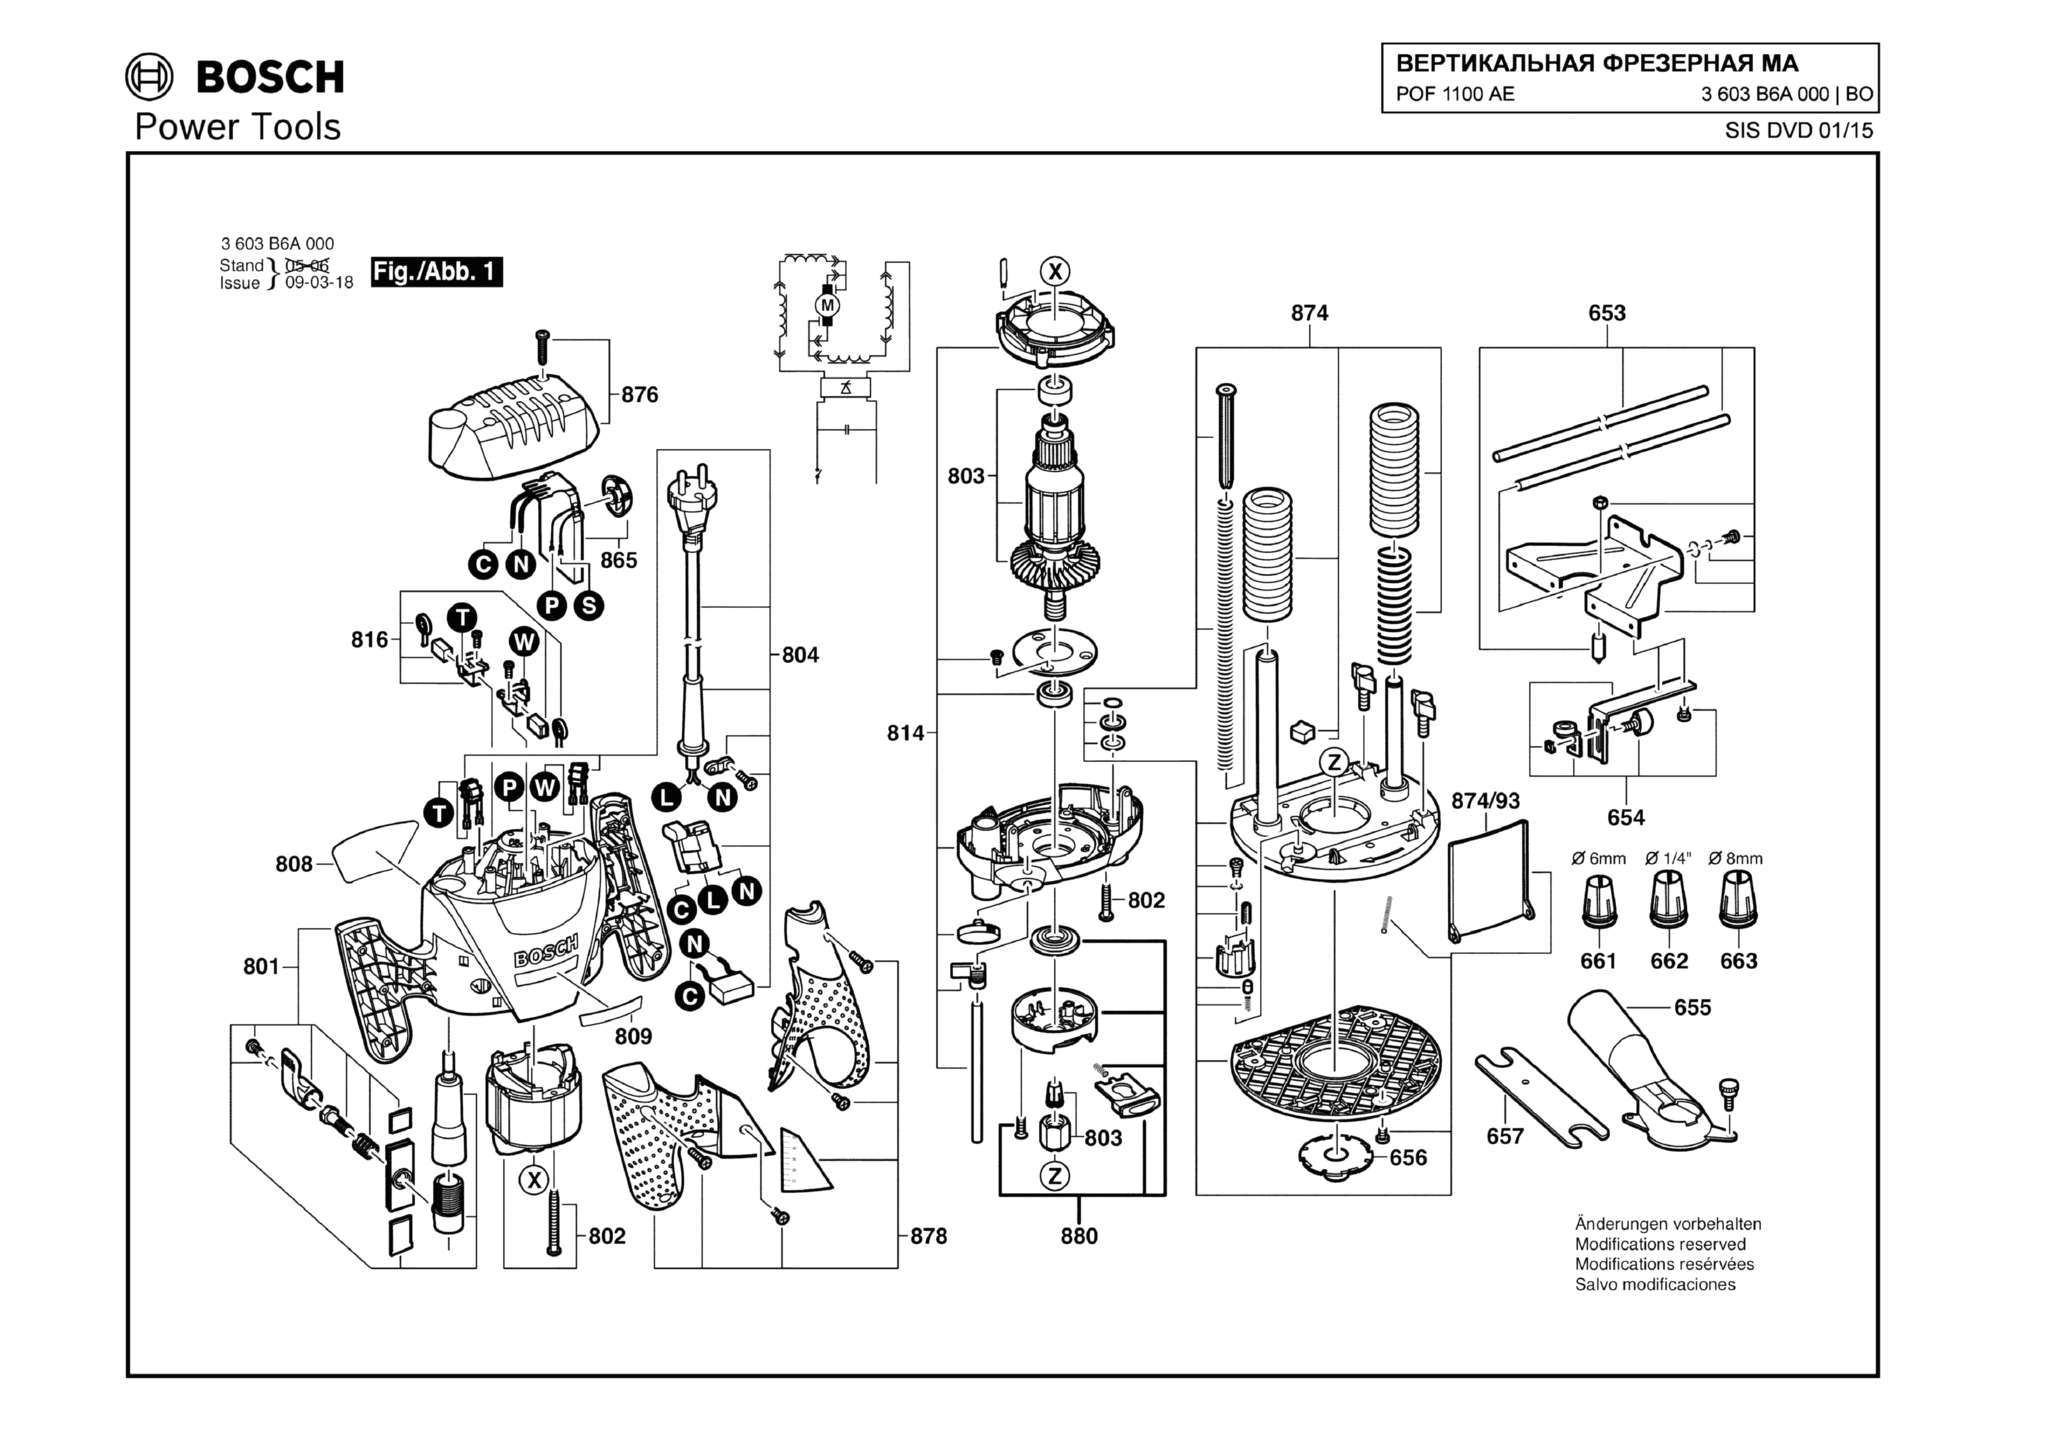 Запчасти, схема и деталировка Bosch POF 1100 AE (ТИП 3603B6A000)